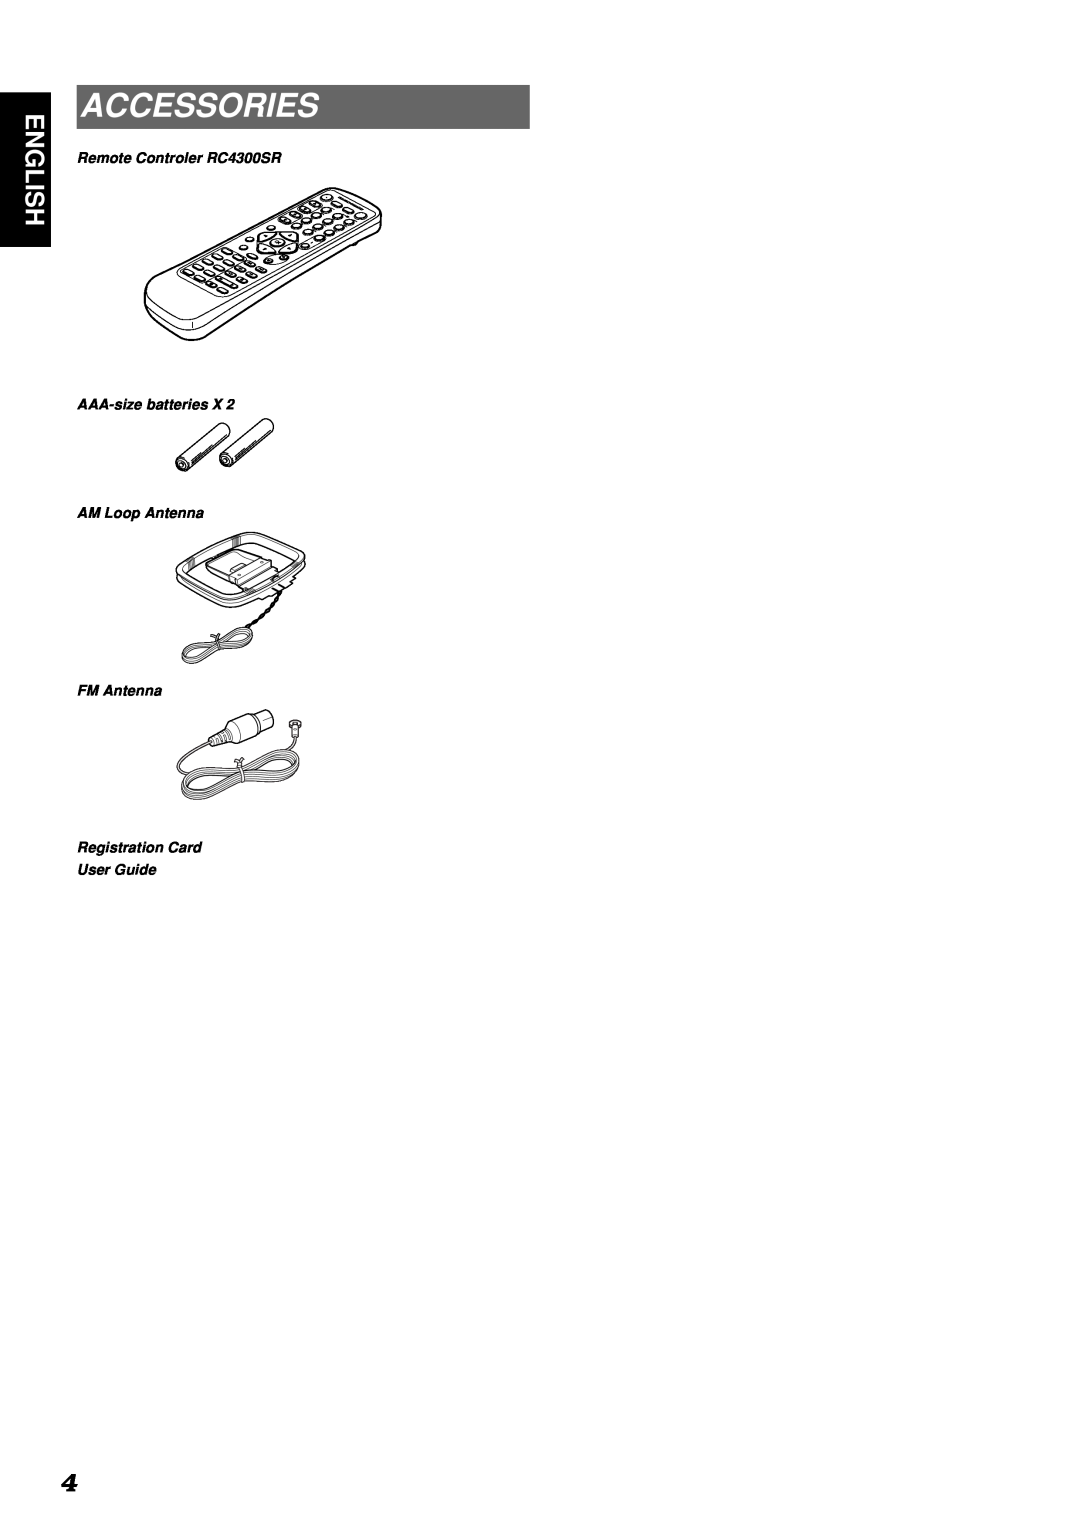 Marantz SR4300 manual Accessories, English, Remote Controler RC4300SR AAA-sizebatteries, User Guide 